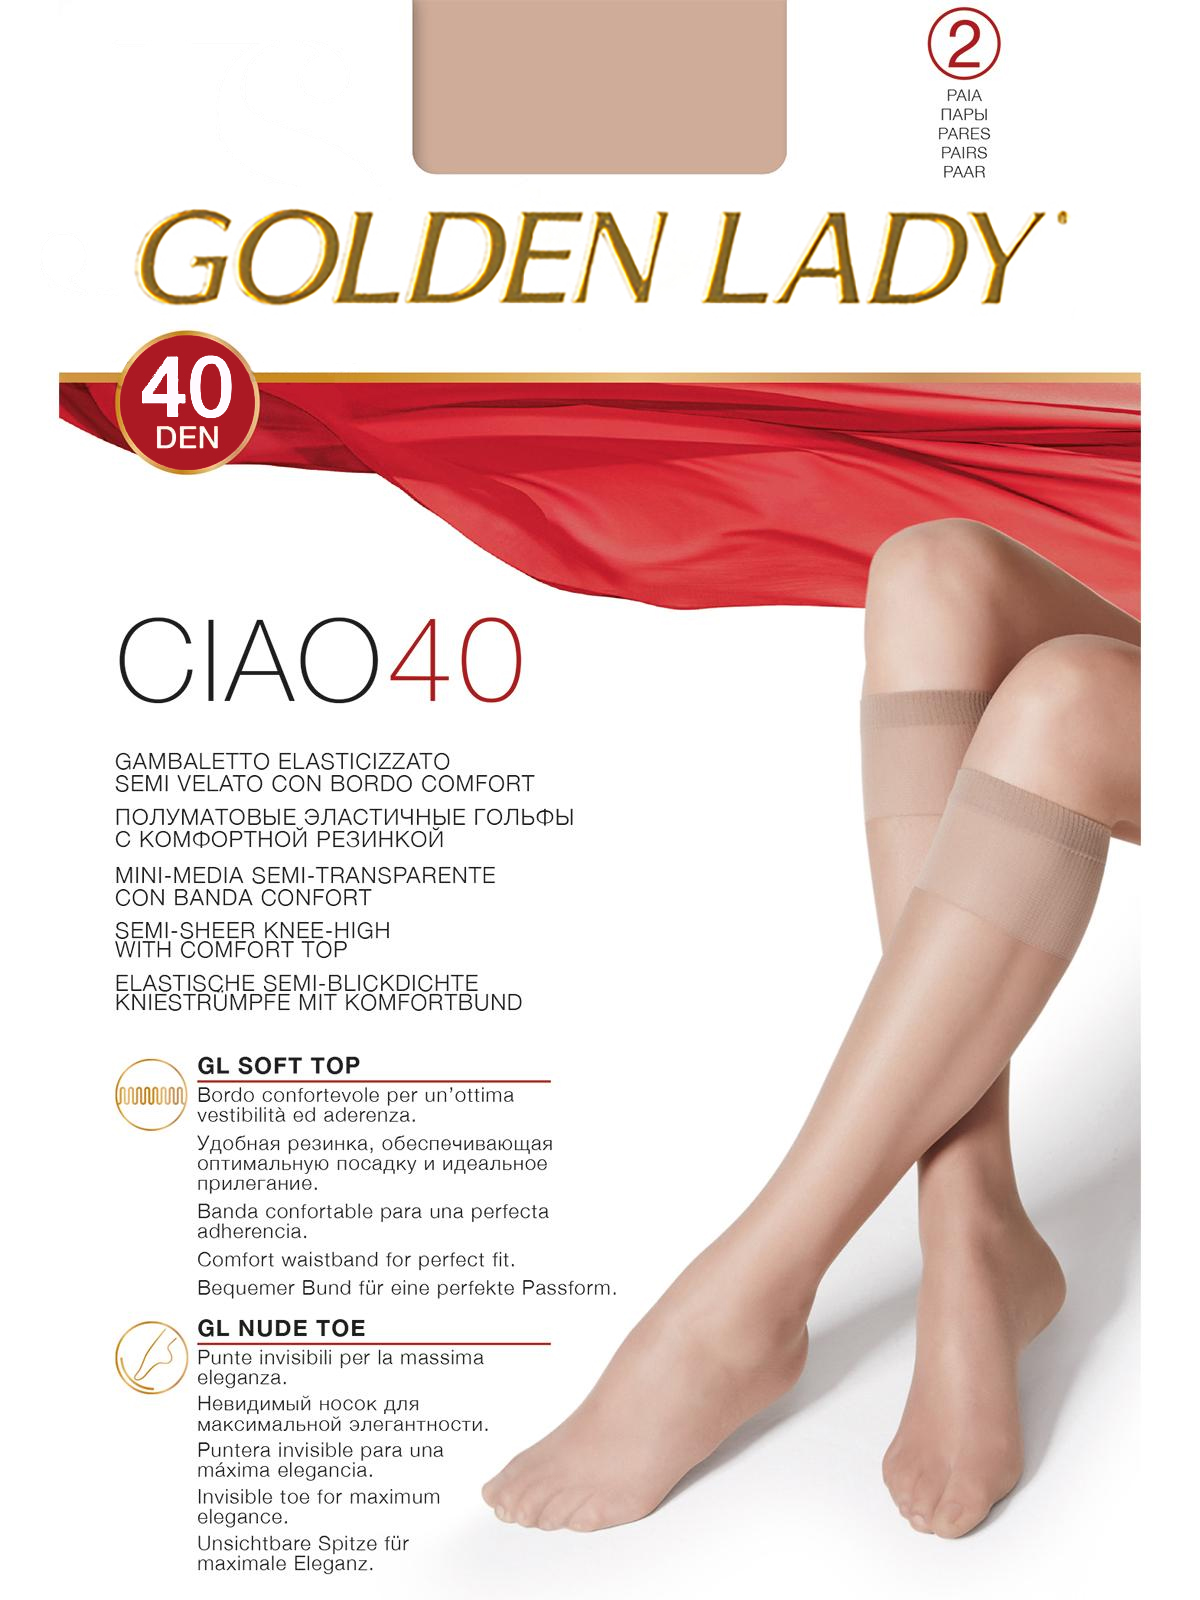 Golden Lady Ciao 40 Gambaletto, 2 Paia от магазина Мир колготок и чулок